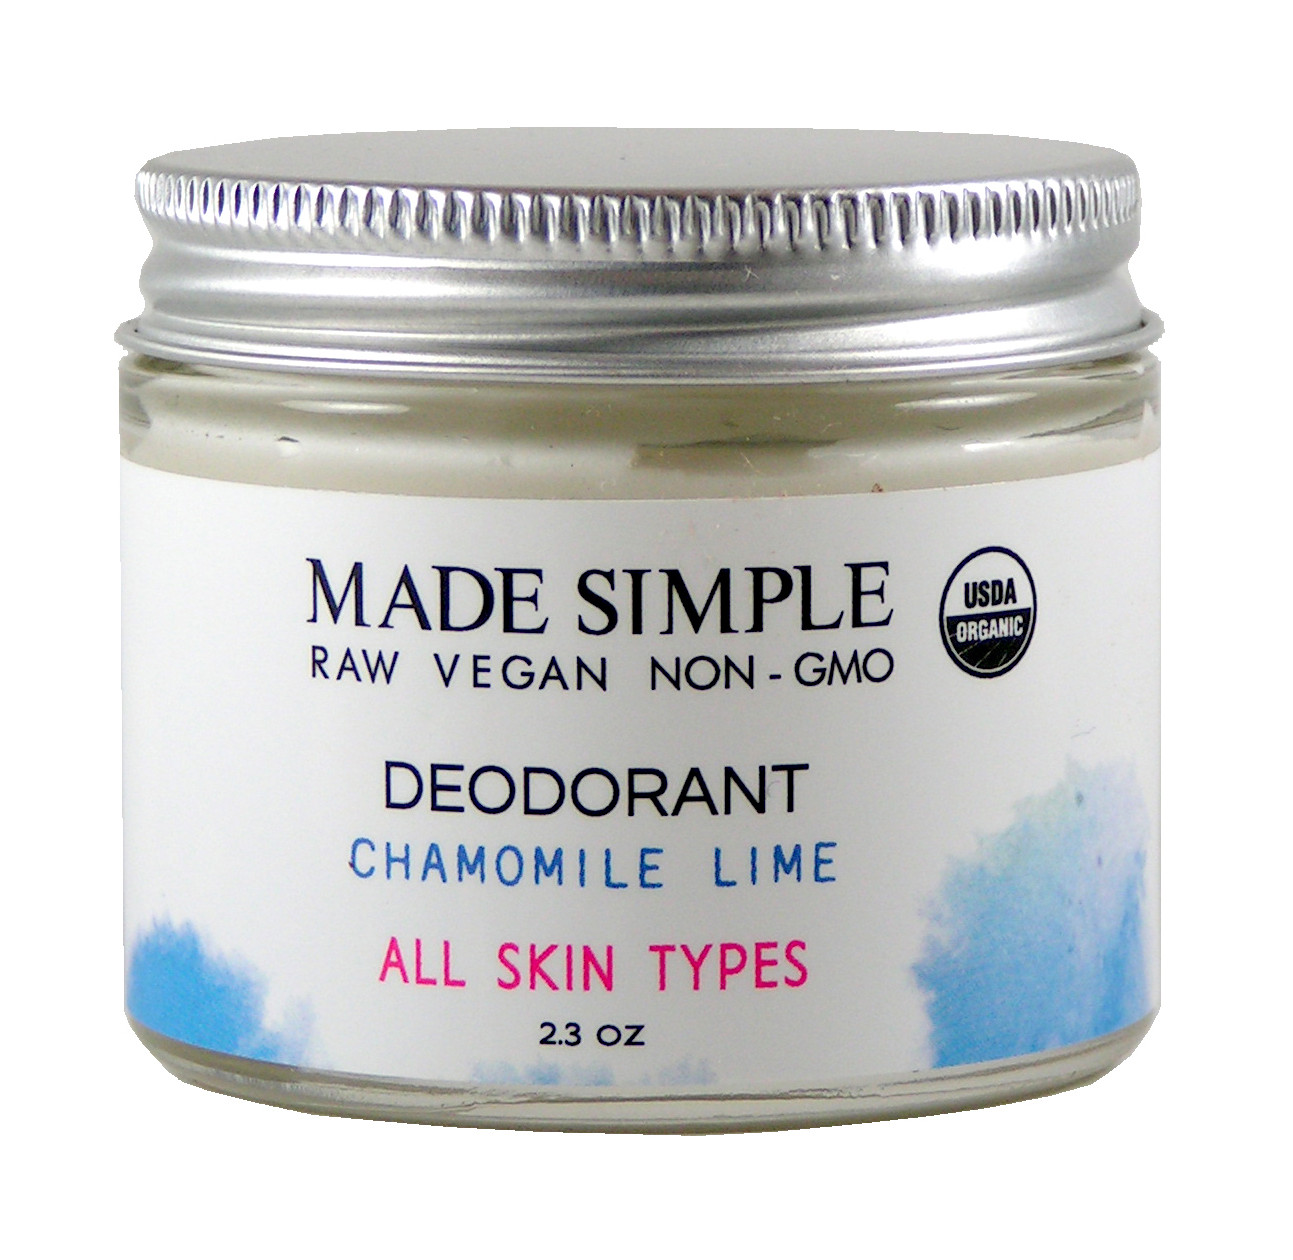 Made-Simple-Skin-Care-Chamomile-Lime-Deodorant-usda-certified-organic-raw-vegan-nonGMO-jar